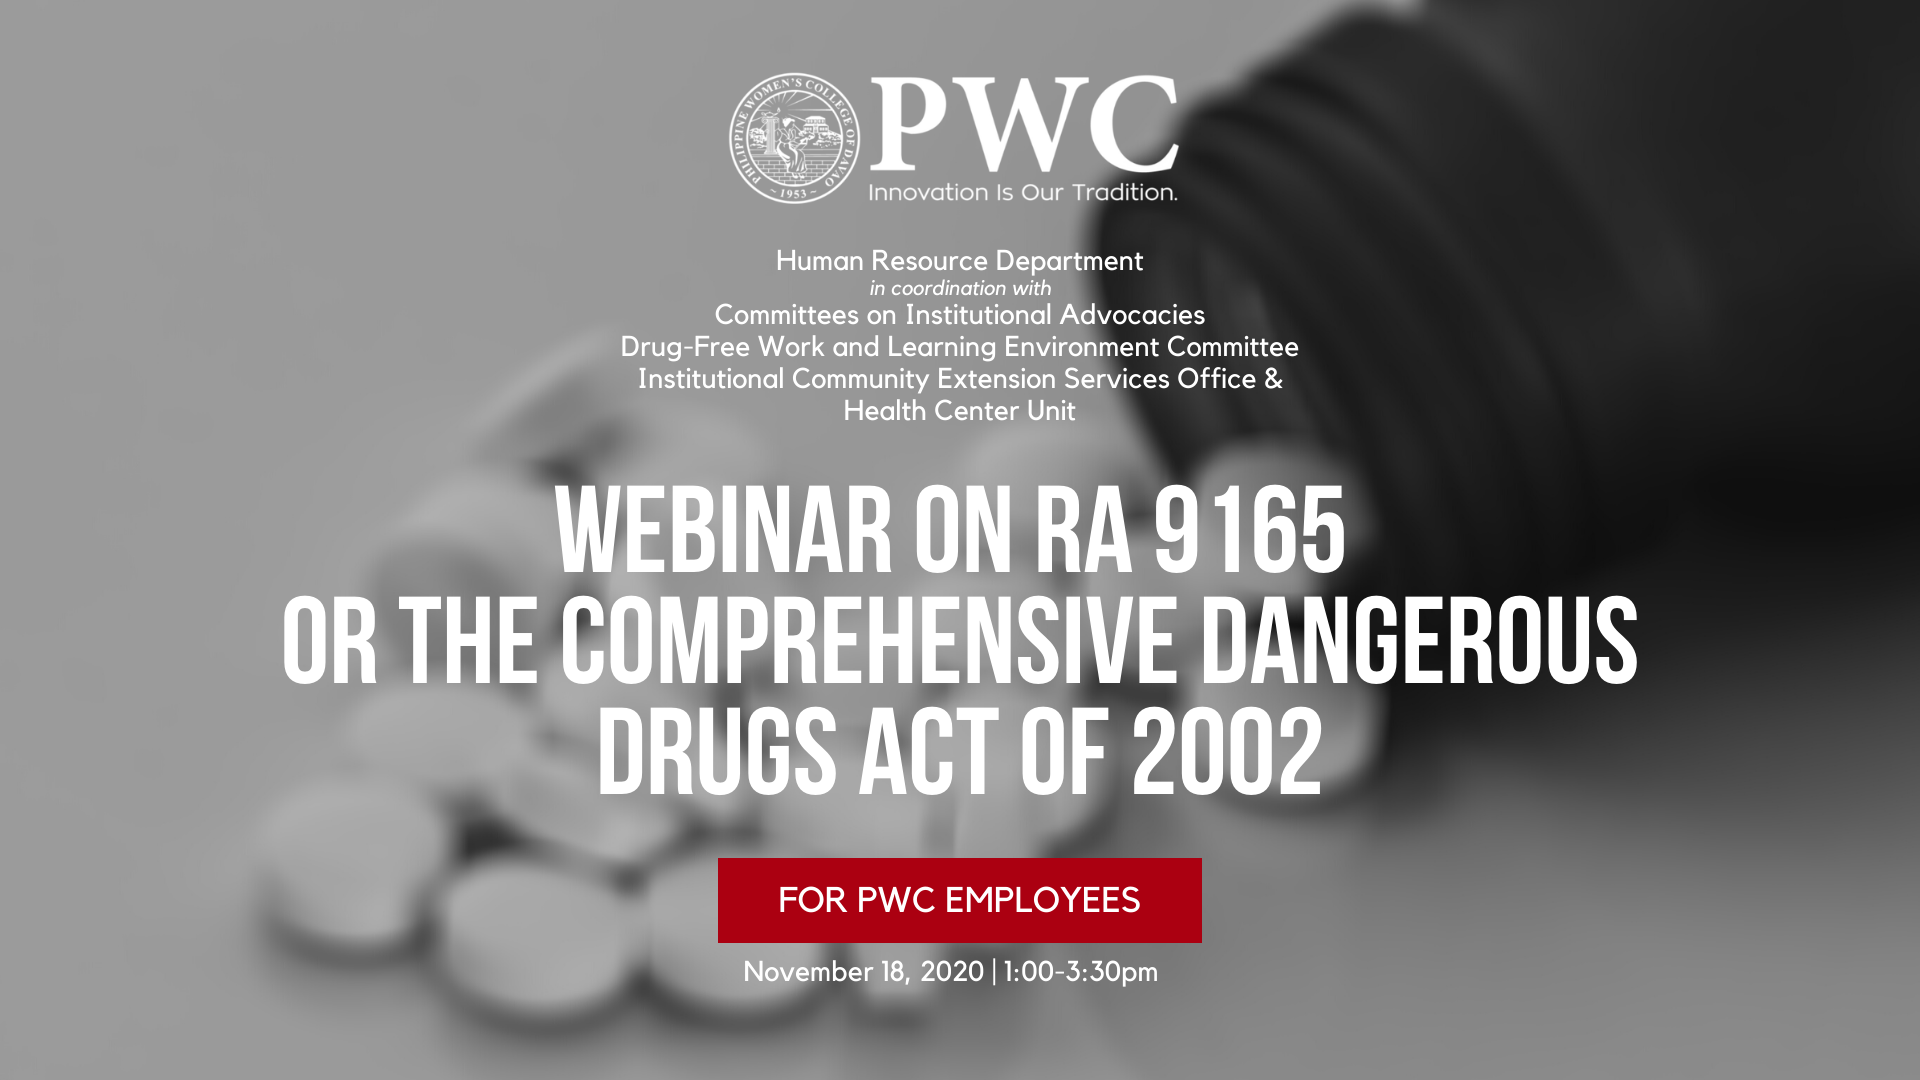 powerpoint presentation of comprehensive dangerous drugs act